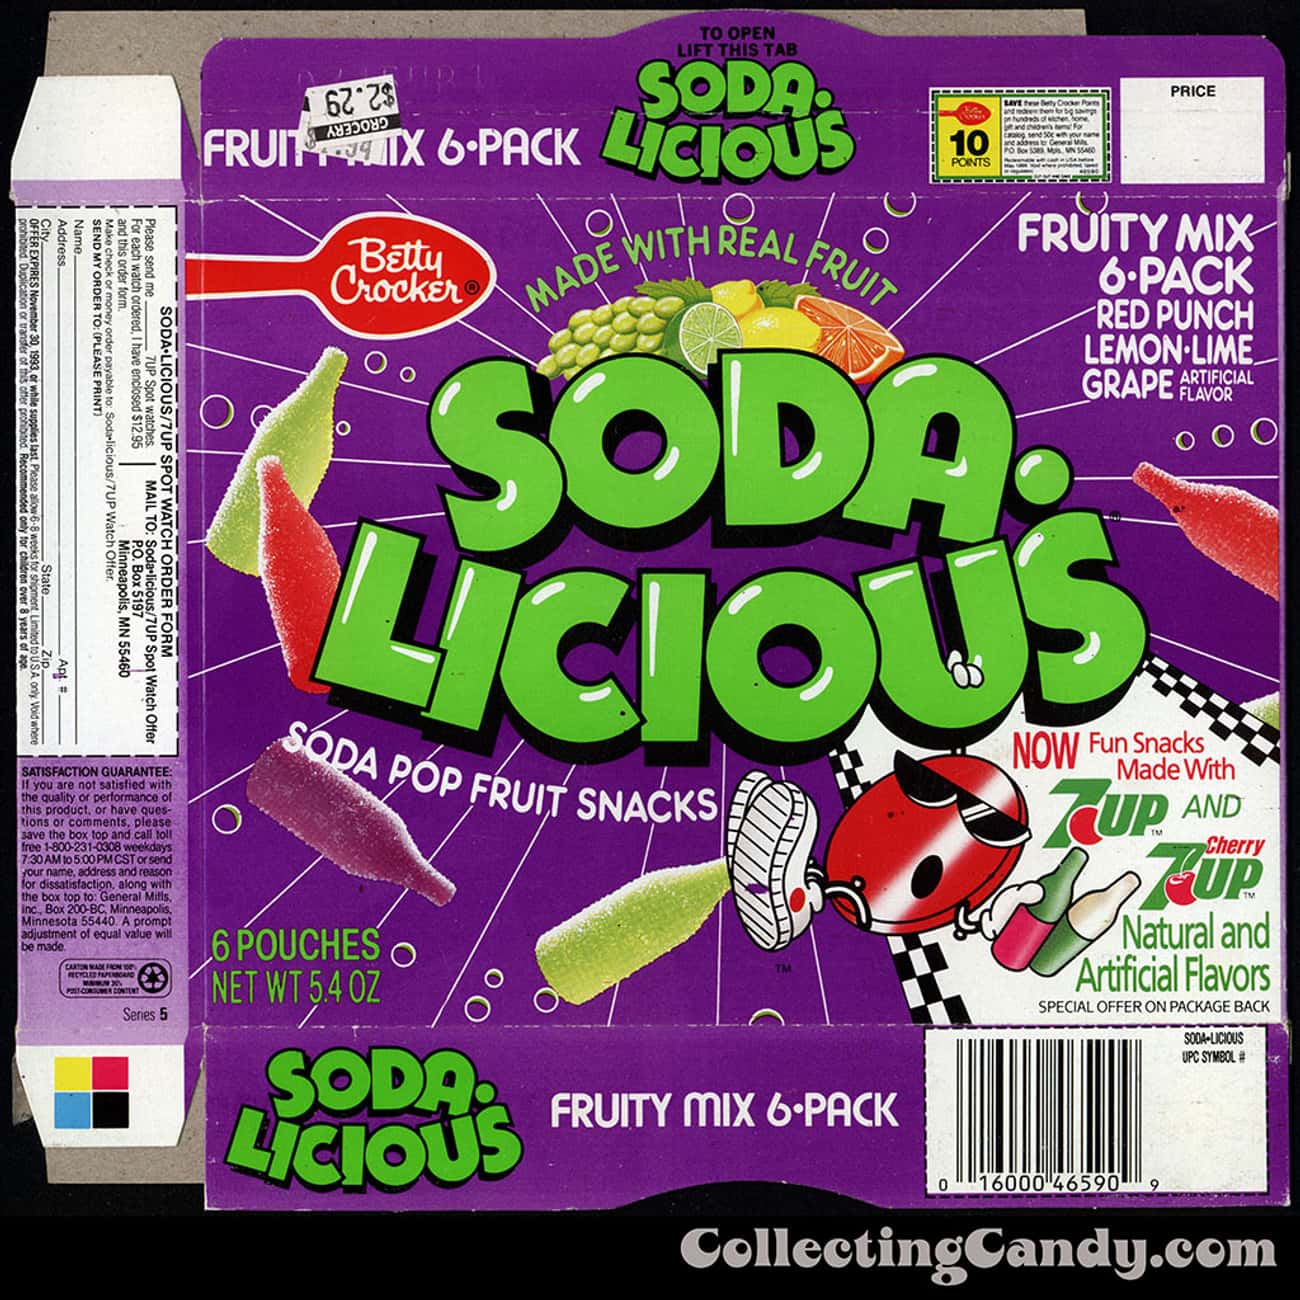 Soda-Licious Soda Pop Fruit Snacks